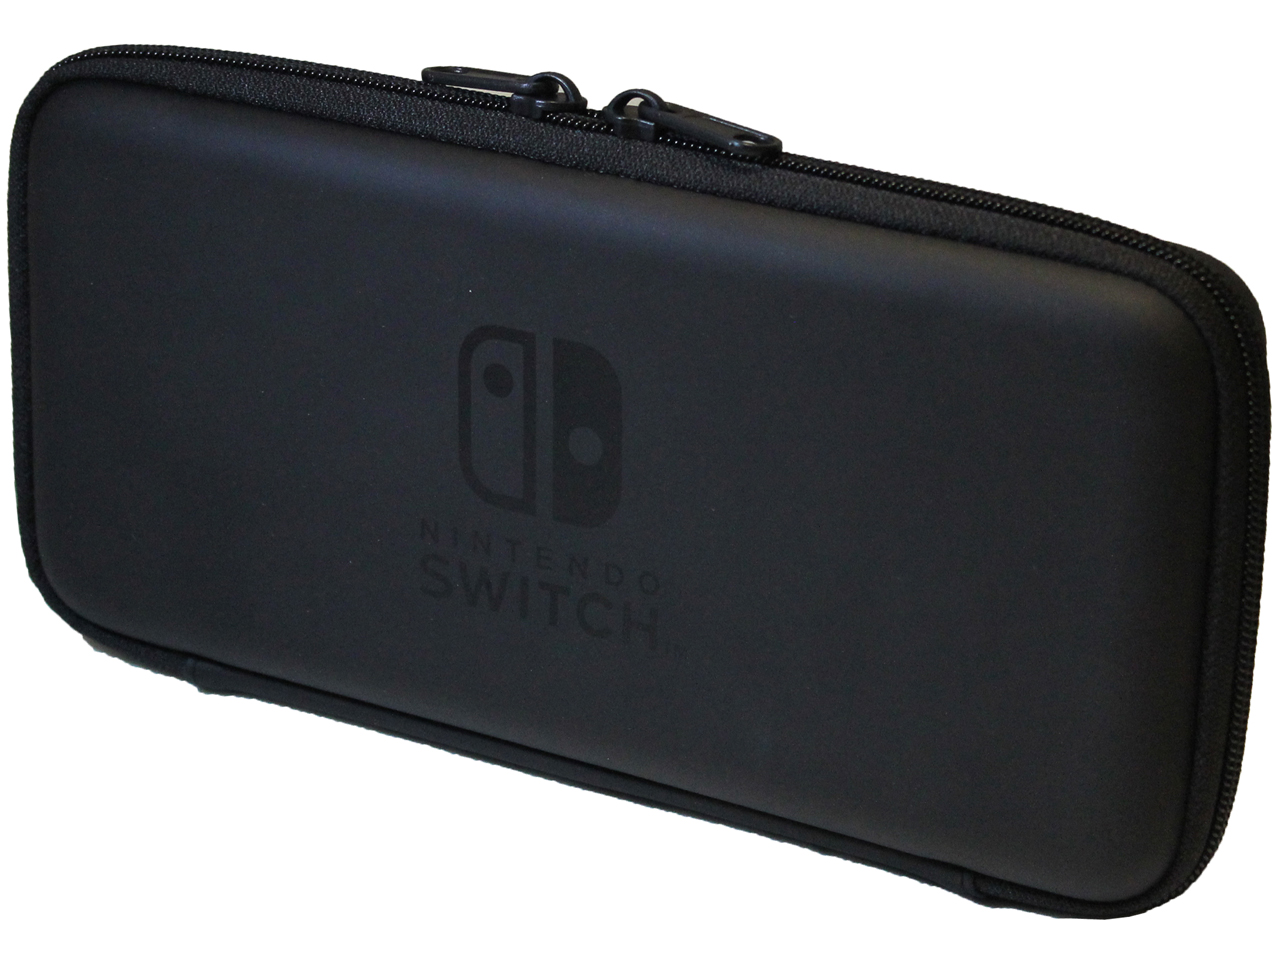 Nintendo Switch専用 スマートポーチ Eva Hacp 02bk ブラック の製品画像 価格 Com